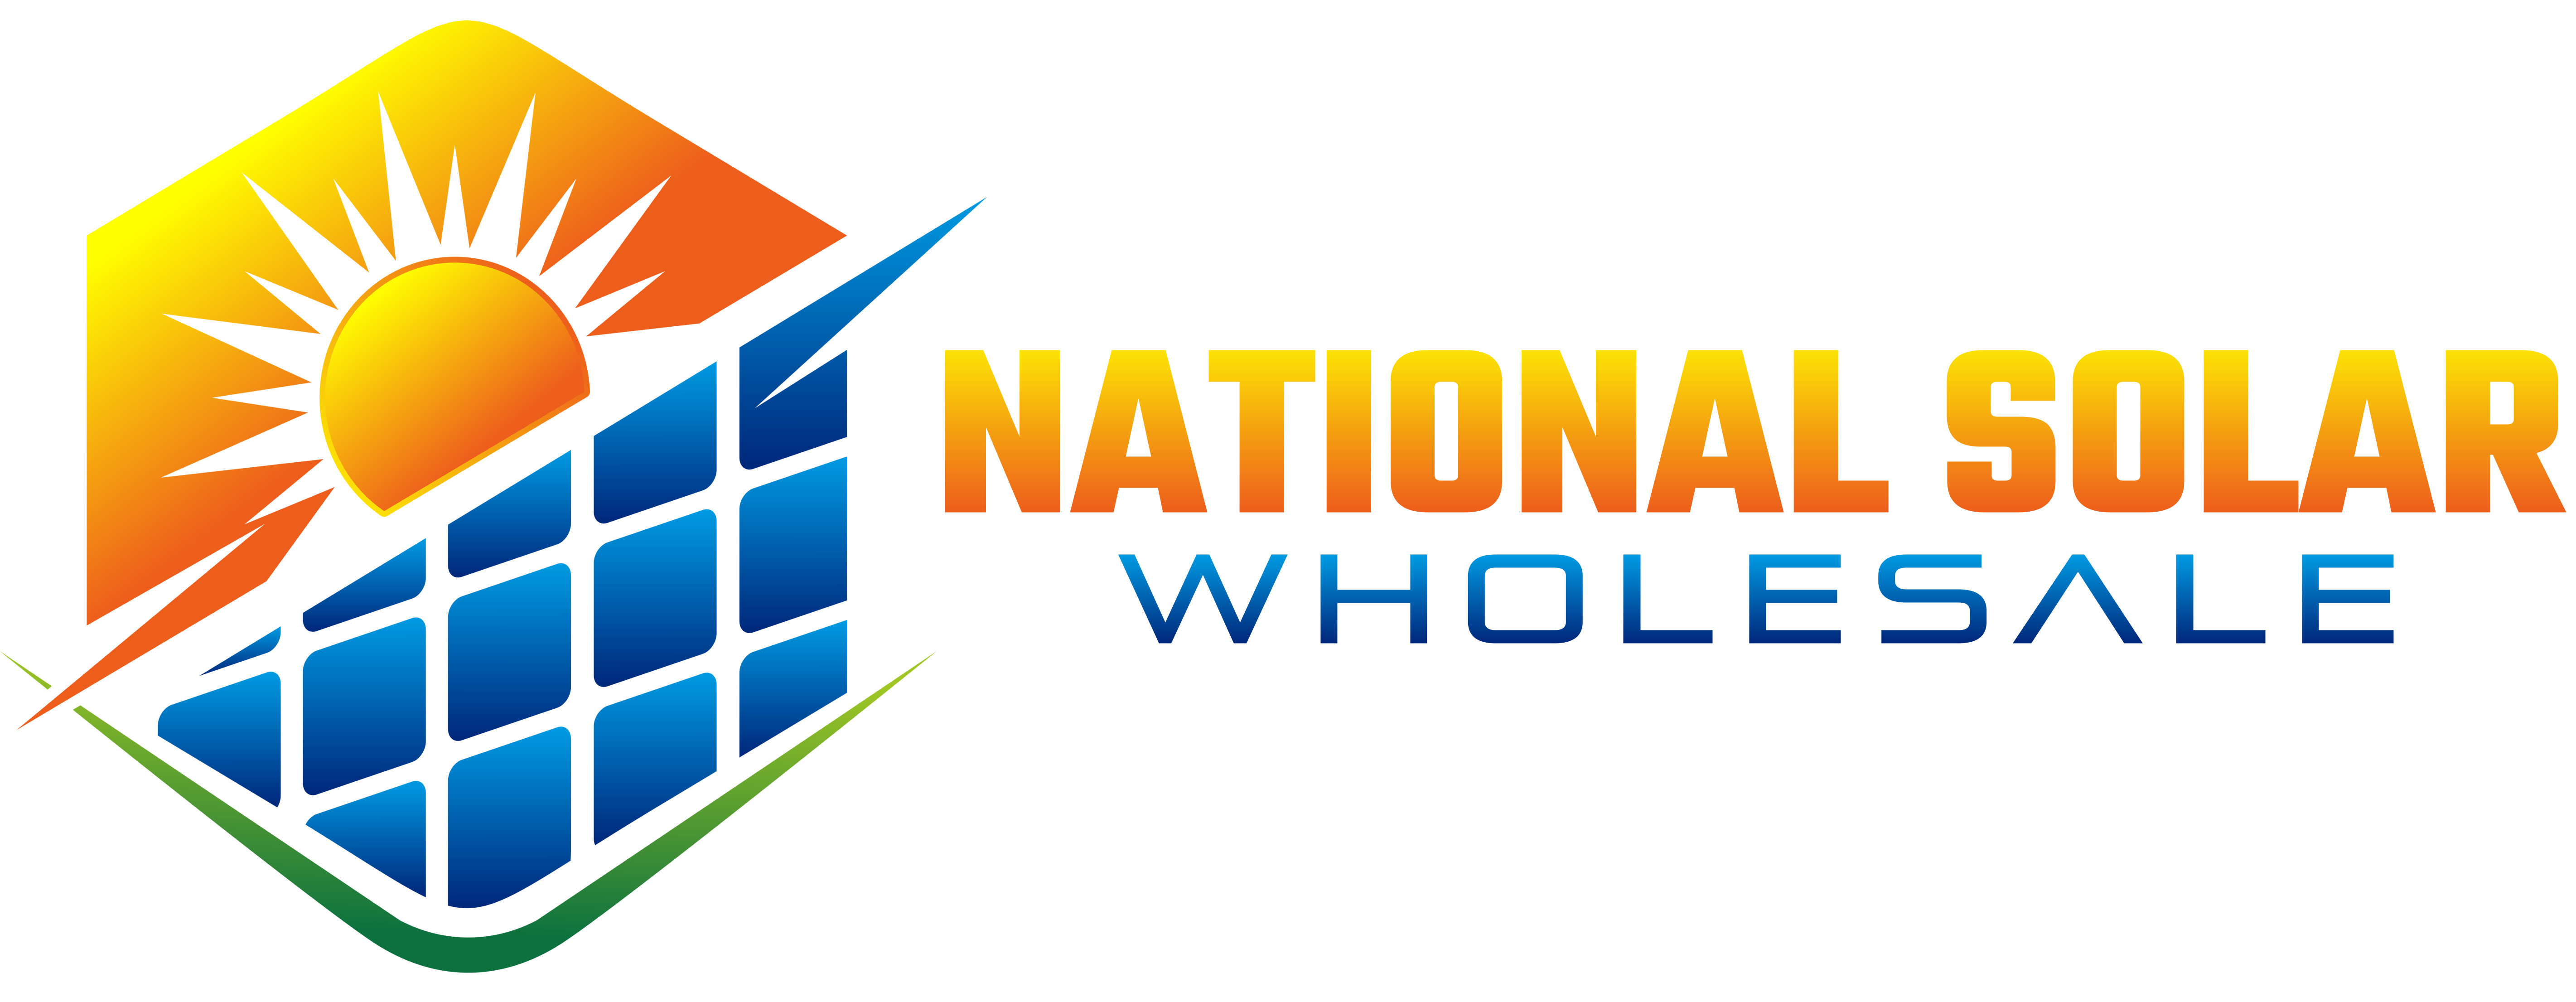 National Solar Wholesale